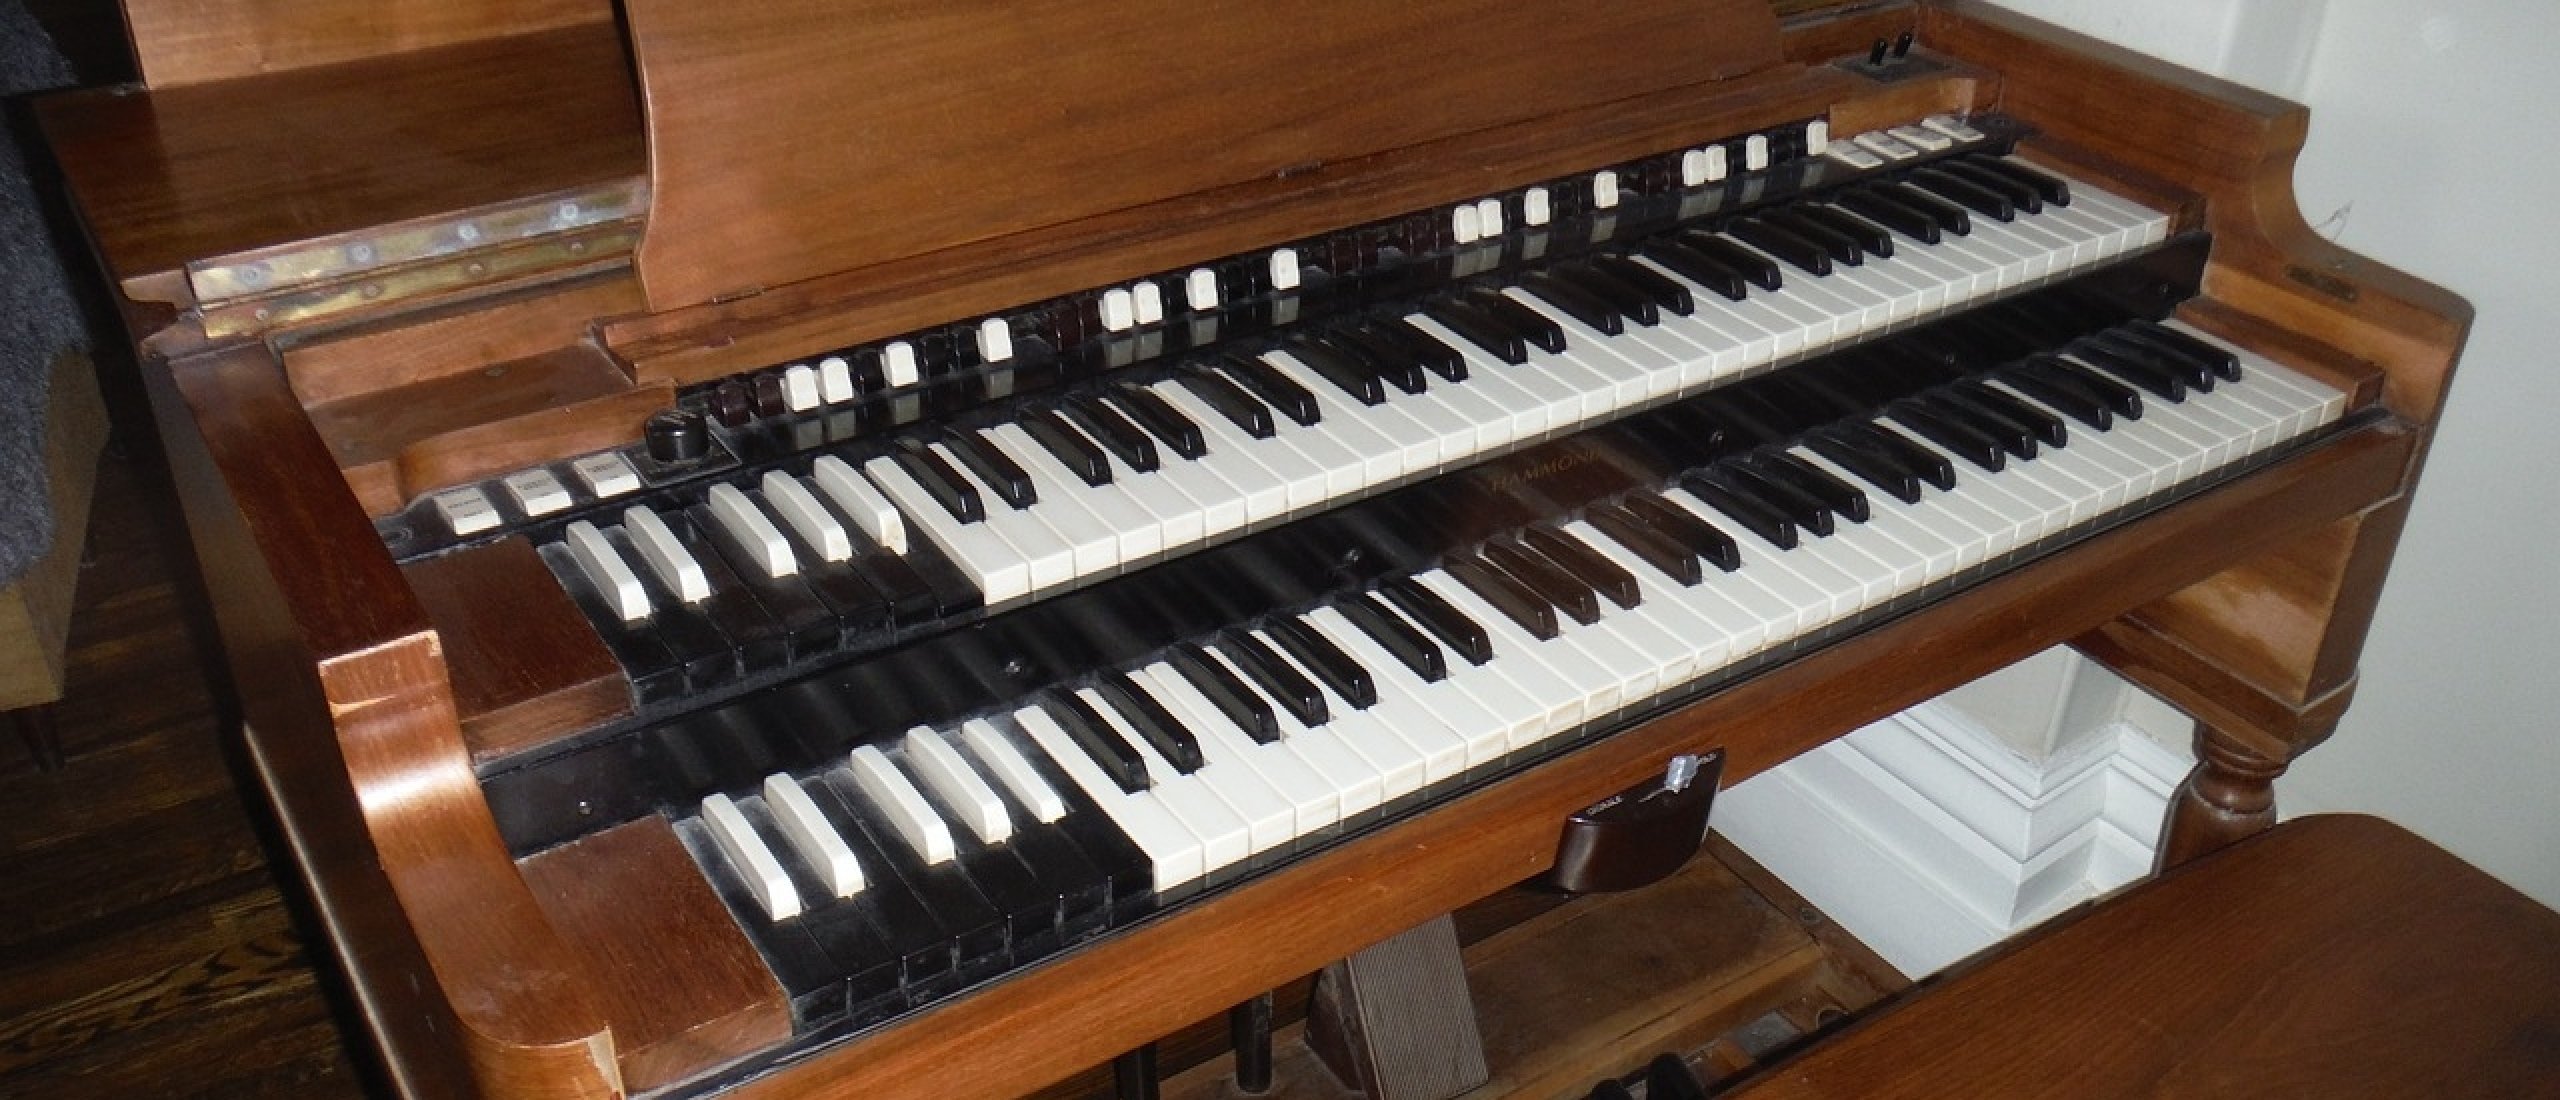 Het klassieke Hammond orgel, terug van weggeweest!